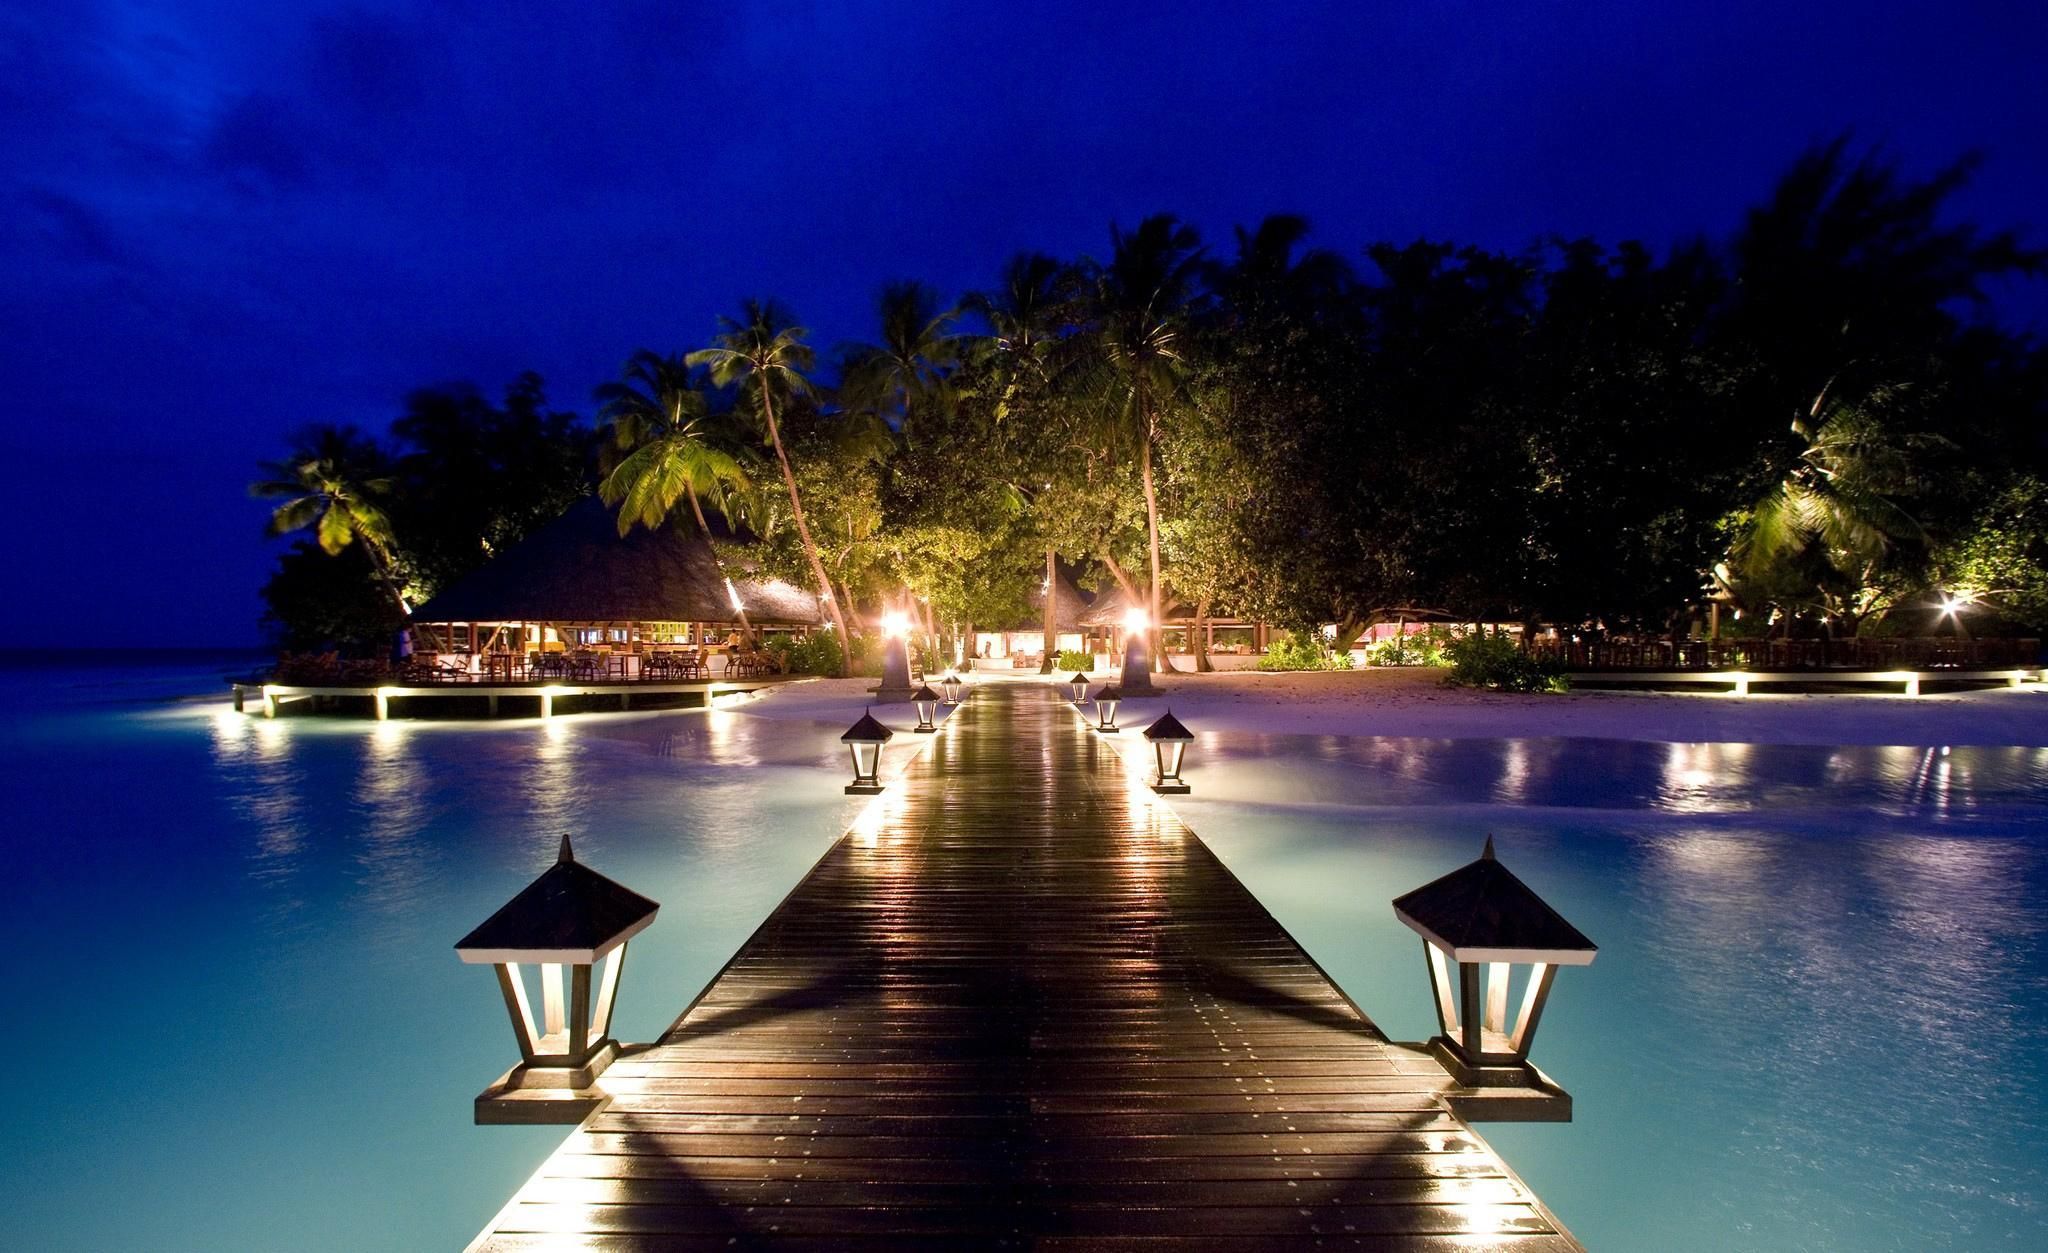 Maldives. Maldives luxury resorts, Beach at night, Island resort